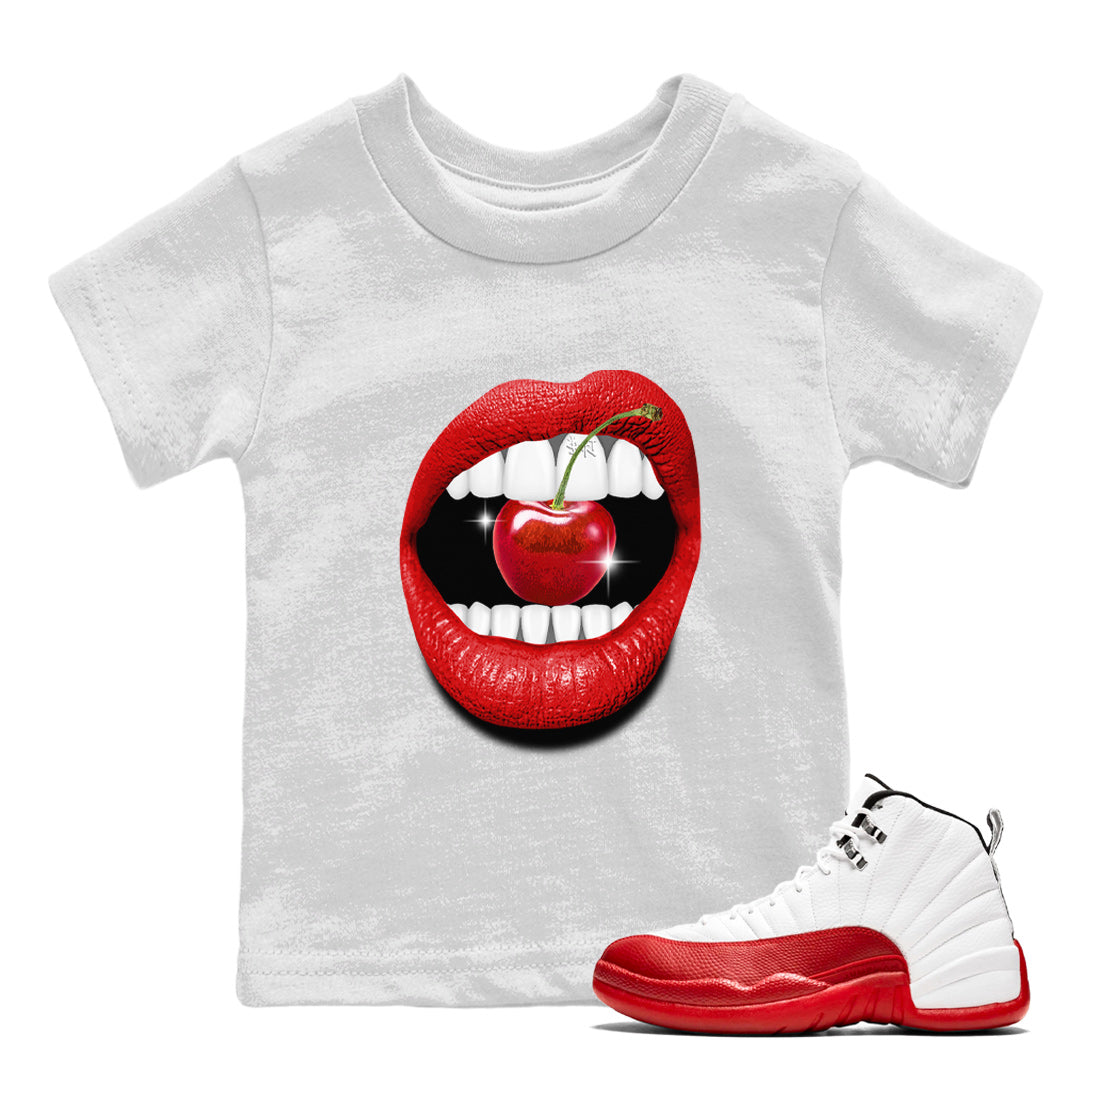 12s Cherry Sneaker Match Tees Lips Cherry Sneaker Shirts Air Jordan 12 Cherry Sneaker Release Tees Kids Shirts White 1